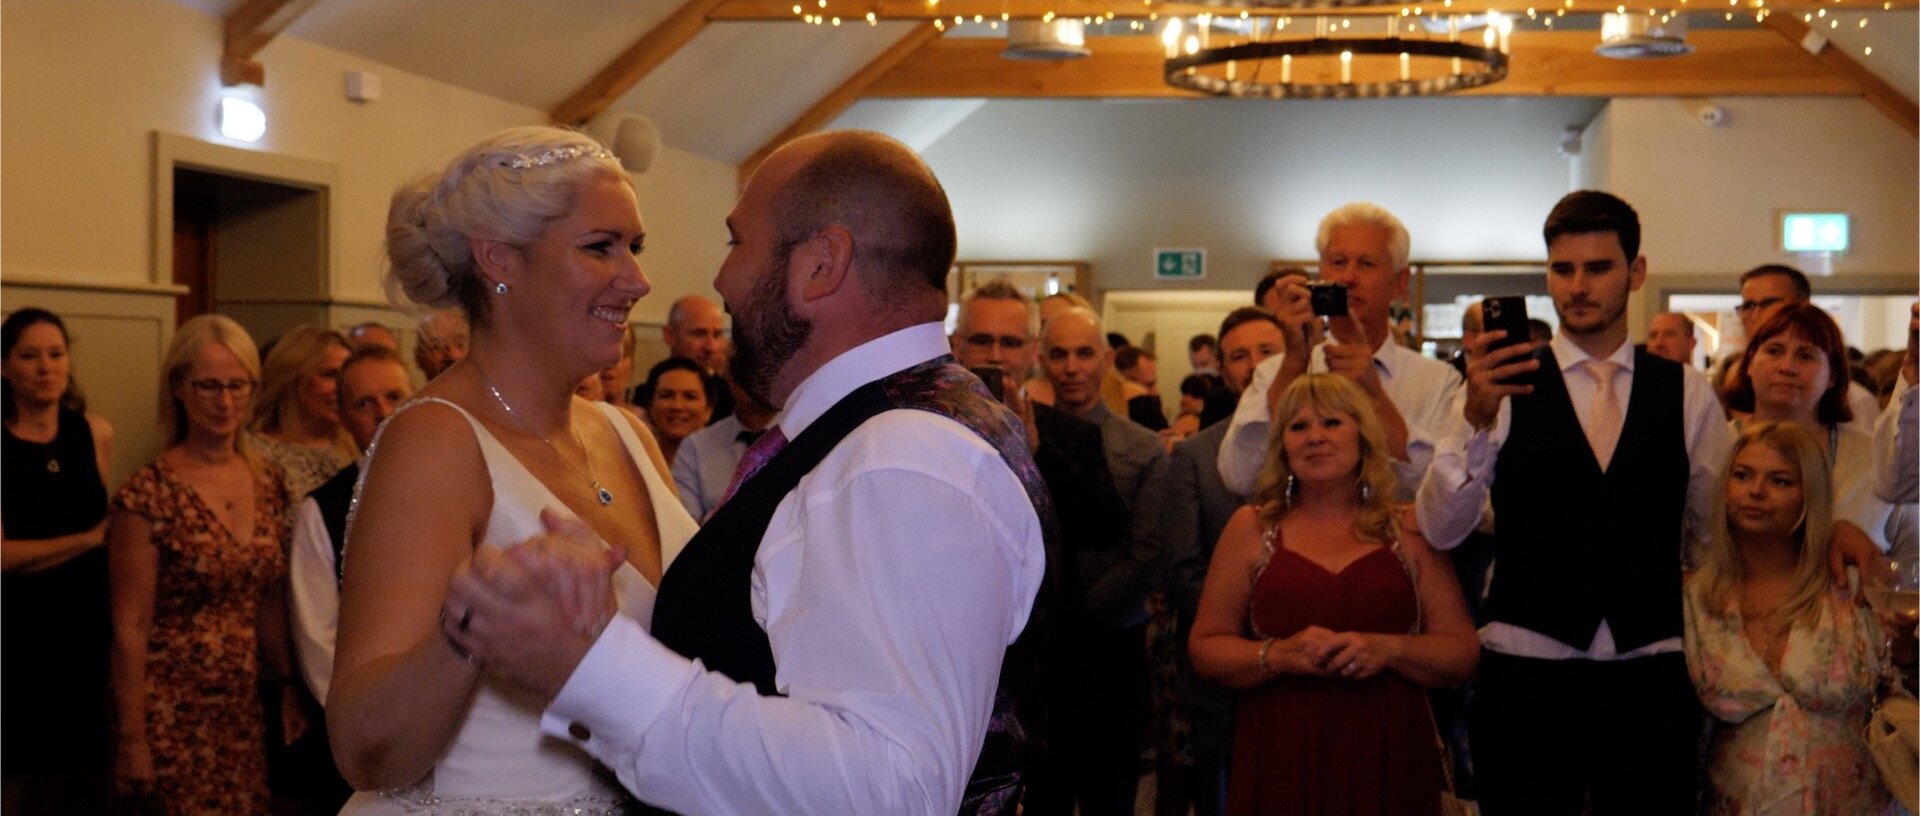 First Dance wedding video at Apton Hall Rochford.jpg